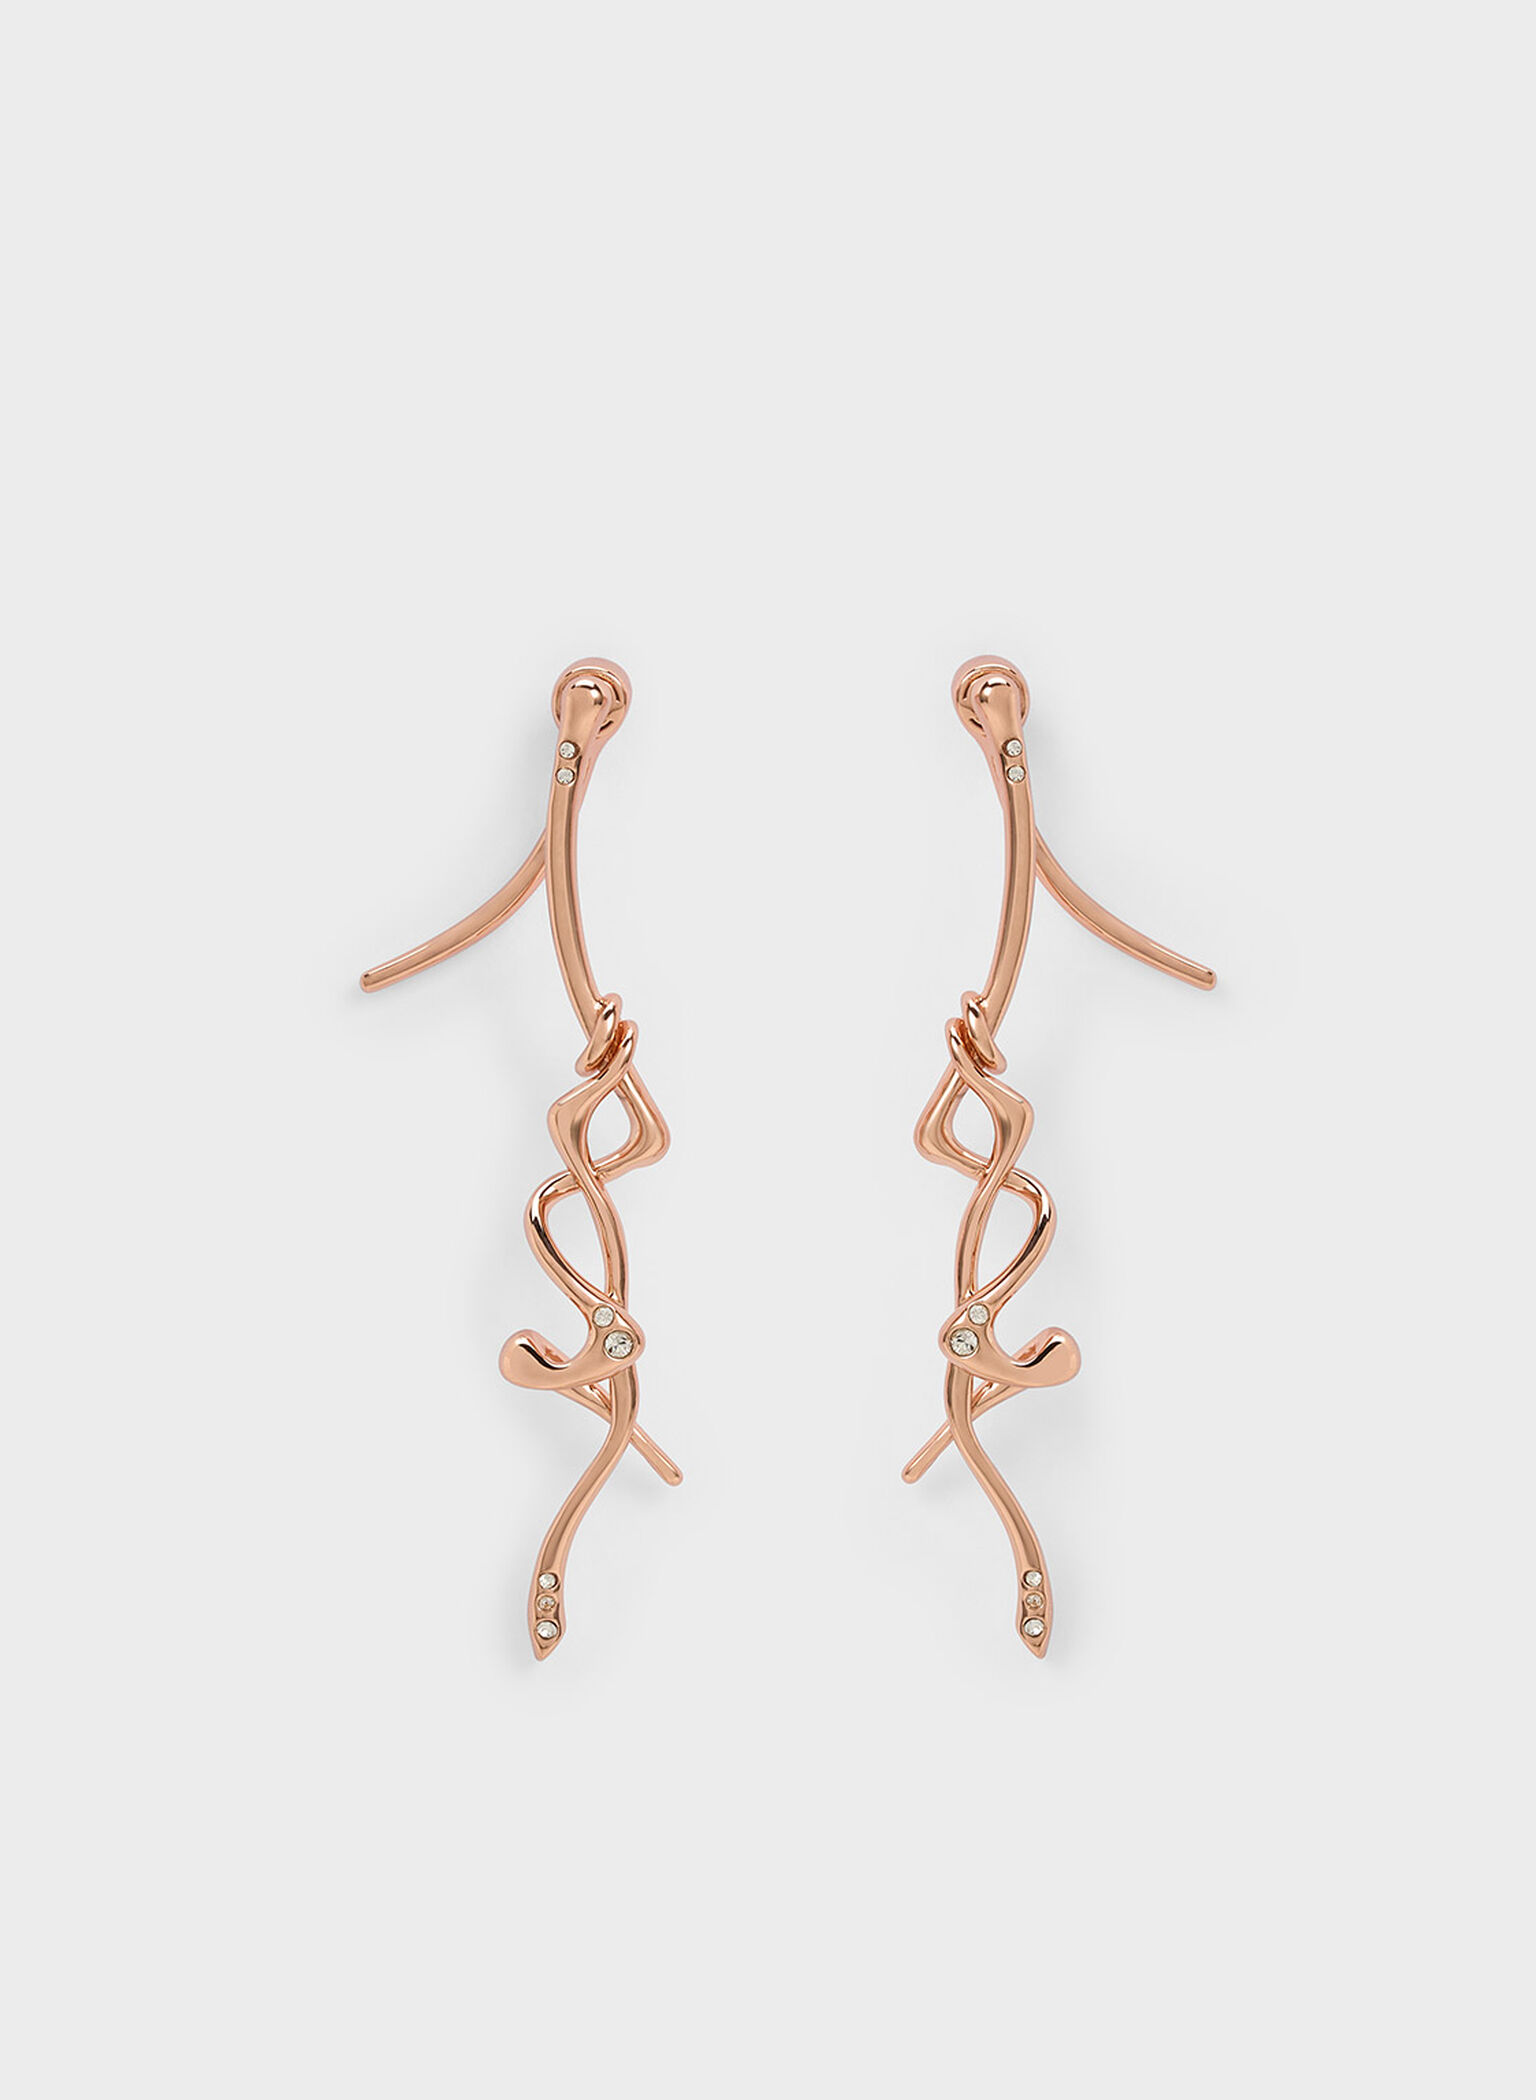 Allegro Sculptural Drop Earrings, Rose Gold, hi-res